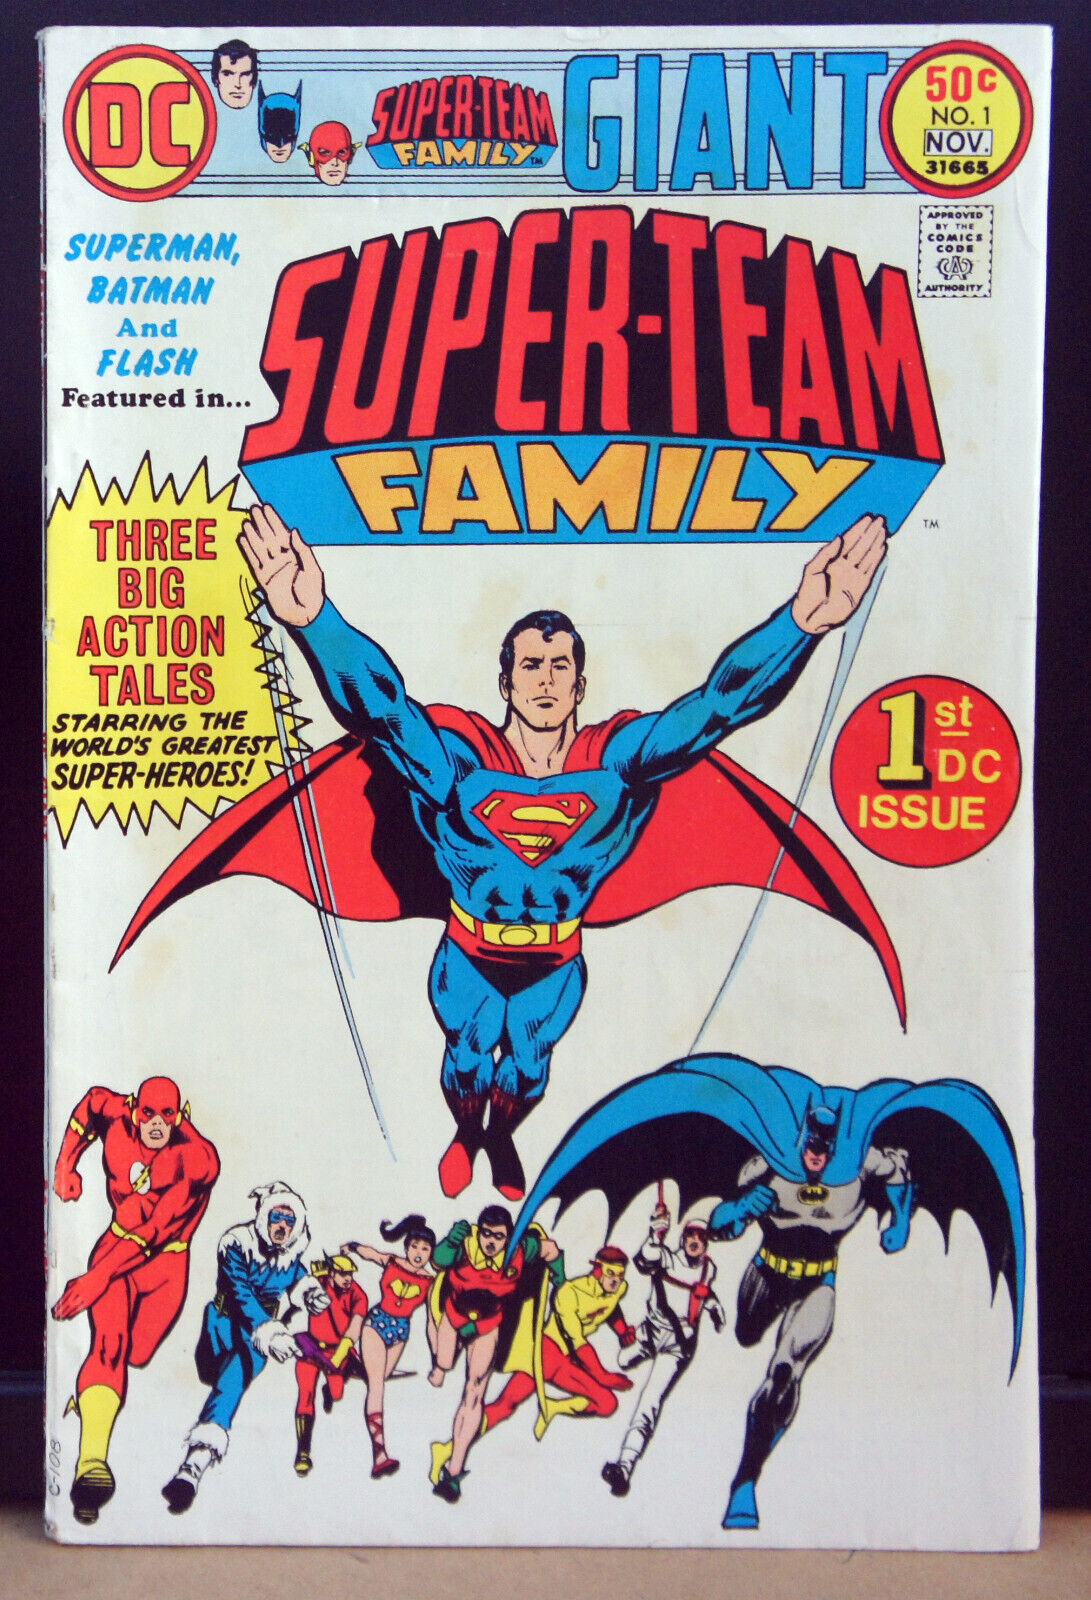 SUPER-TEAM FAMILY #1 (1975) COVER DICK GIORDANO INTERIOR NEAL ADAMS, GIL KANE